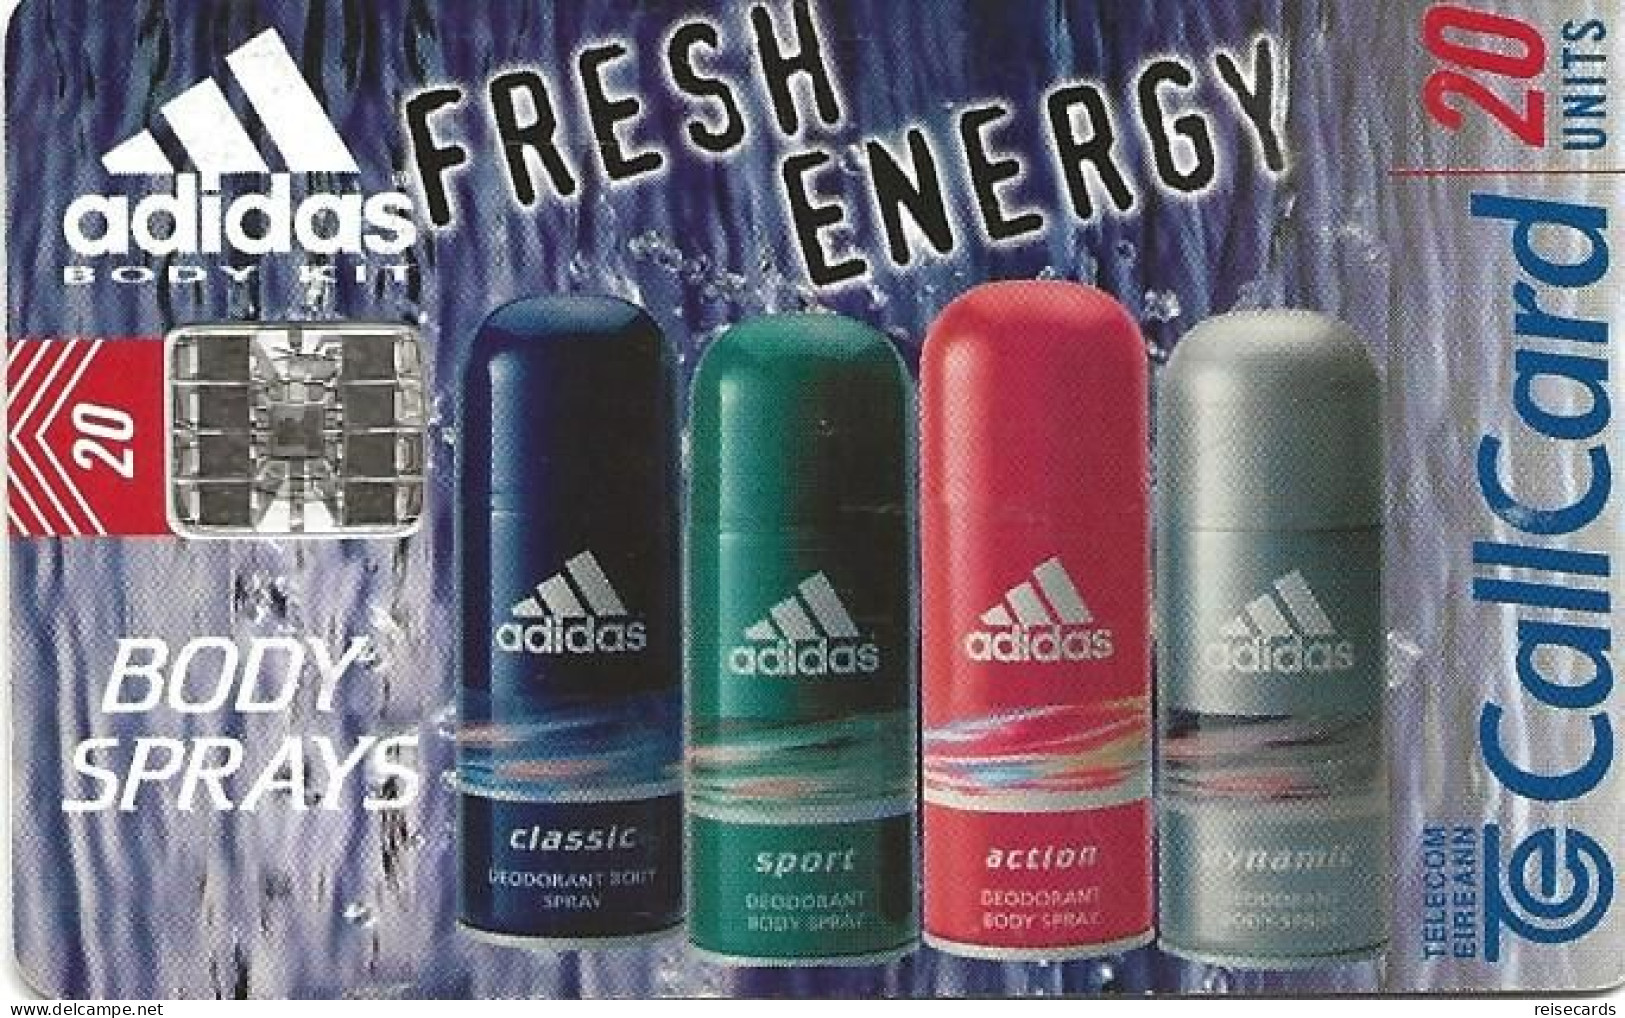 Ireland: Telecom Eireann - 1998 Adidas Body Sprays - Irlande